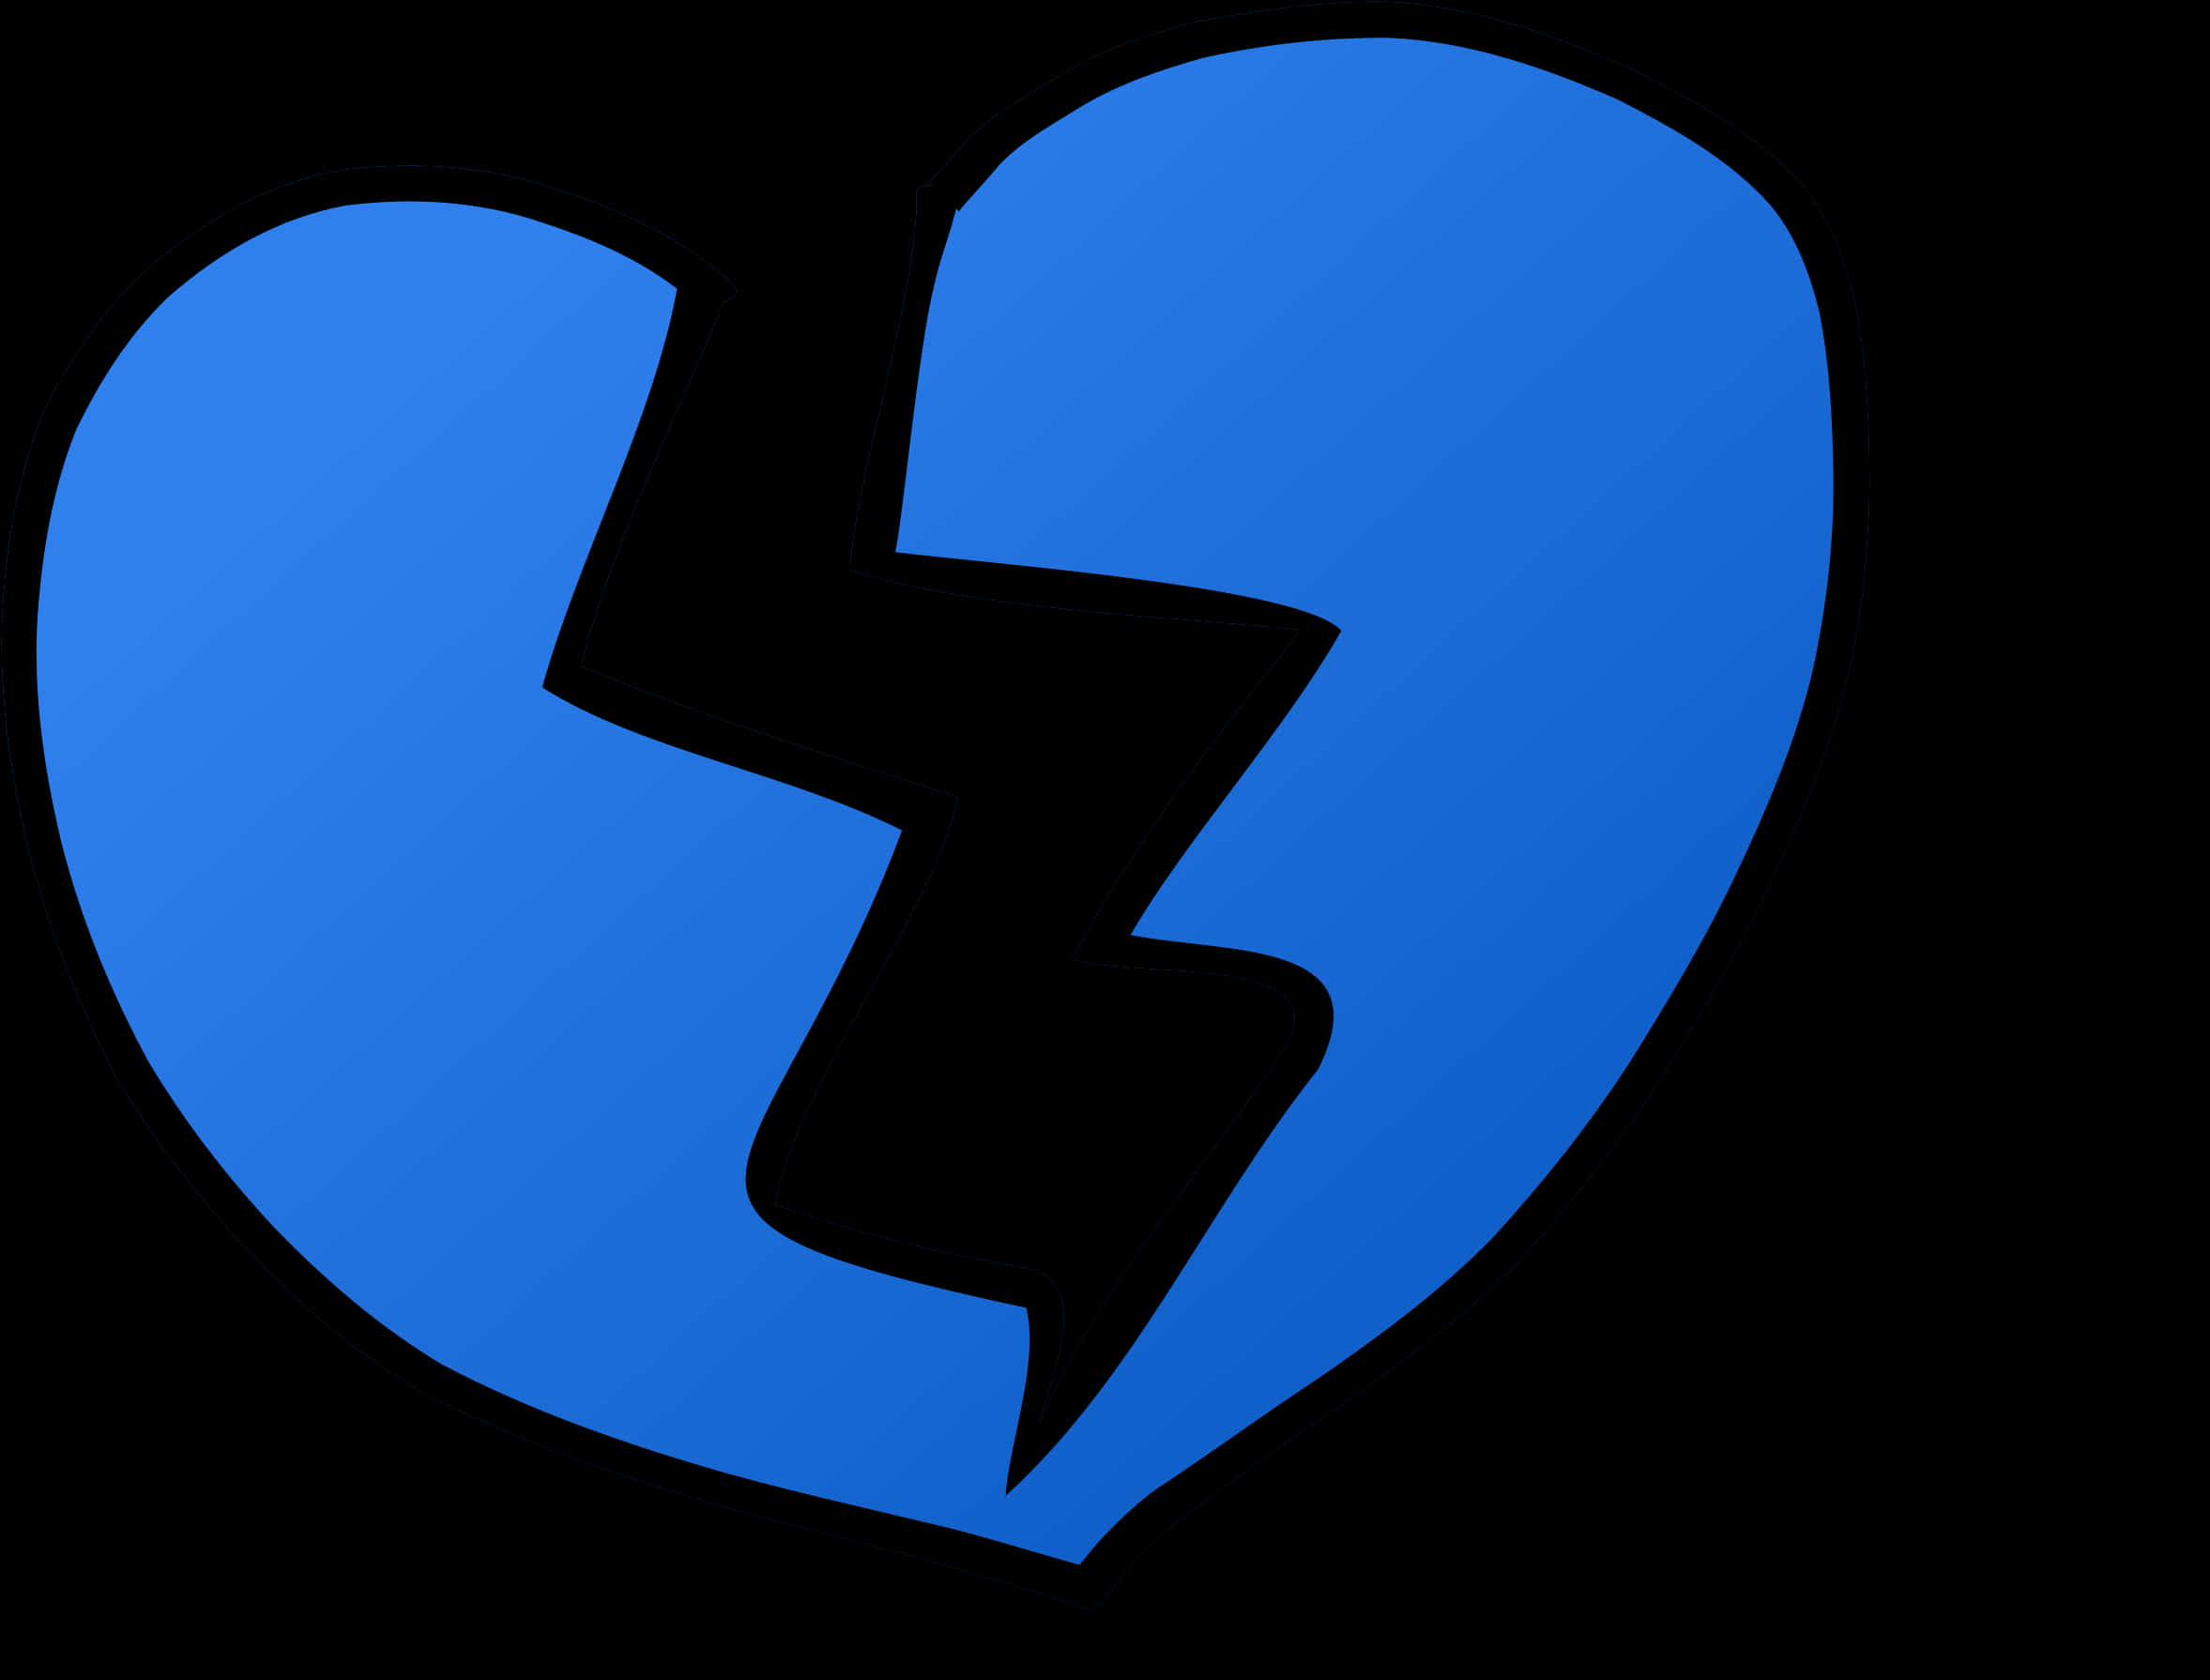 Blue Broken Heart Graphic PNG image